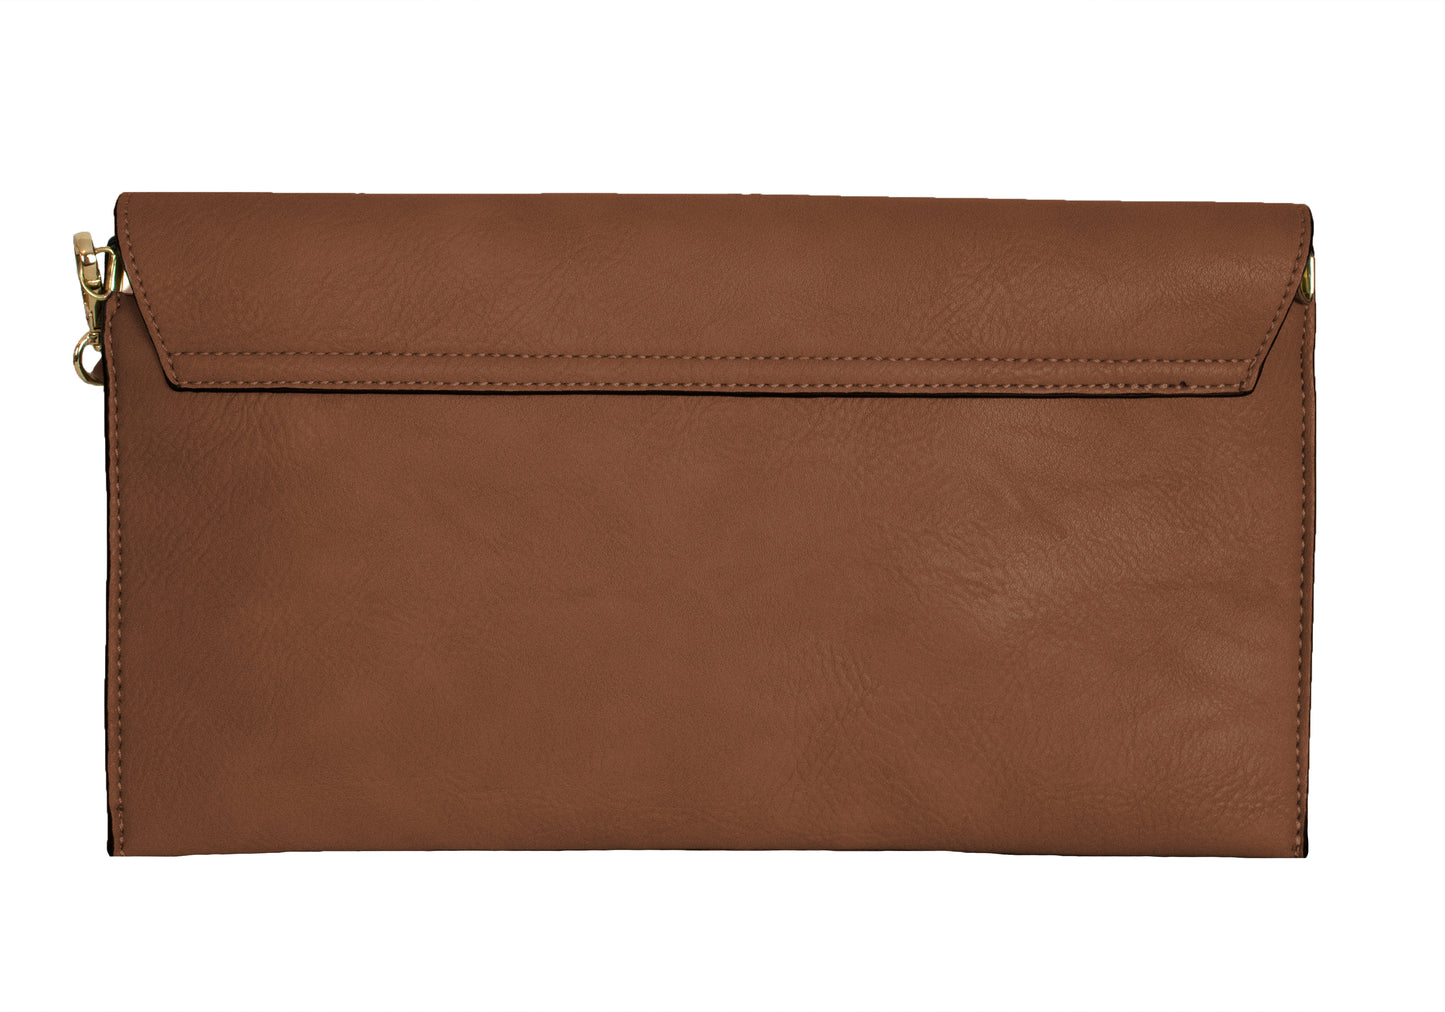 Clutch Bag / Crossbody / Shoulder Bag